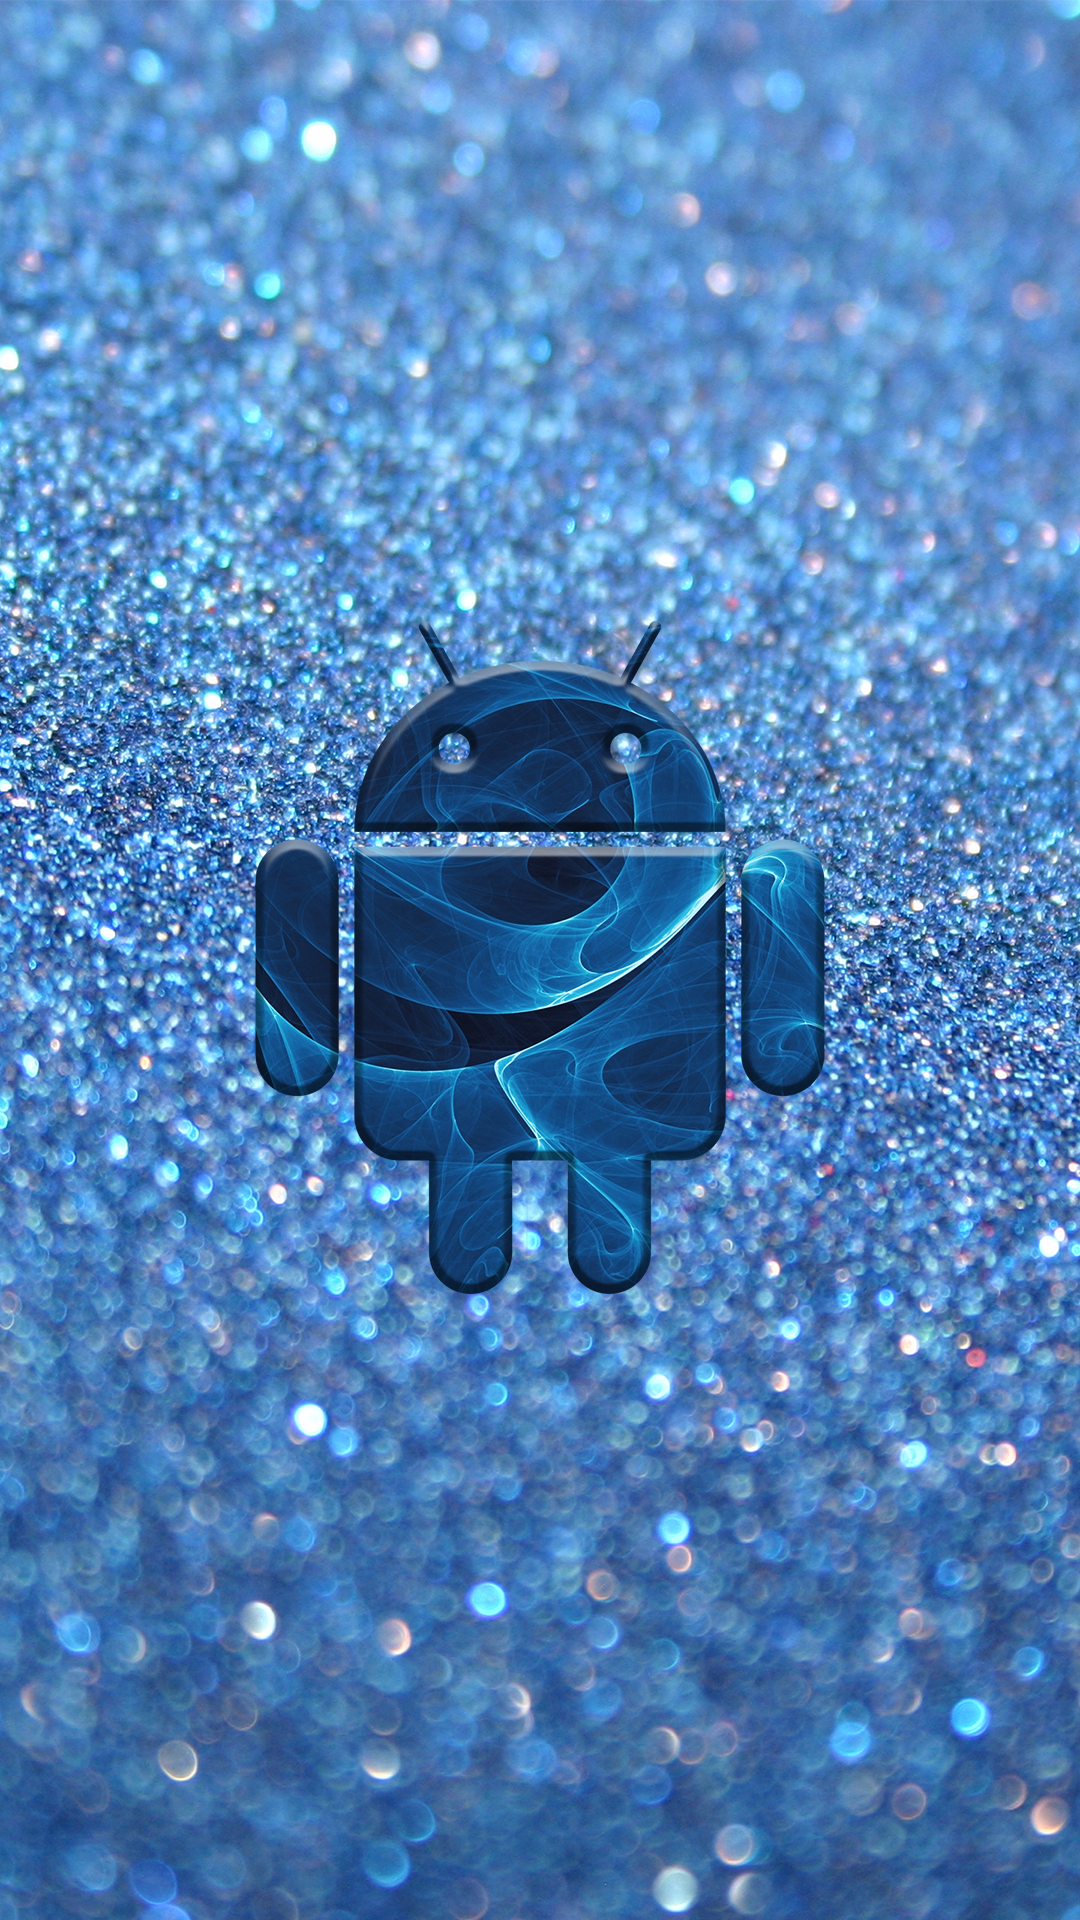 Samsung Galaxy A9 Pro Wallpaper: Blue Smoke HD Android Wallpaper